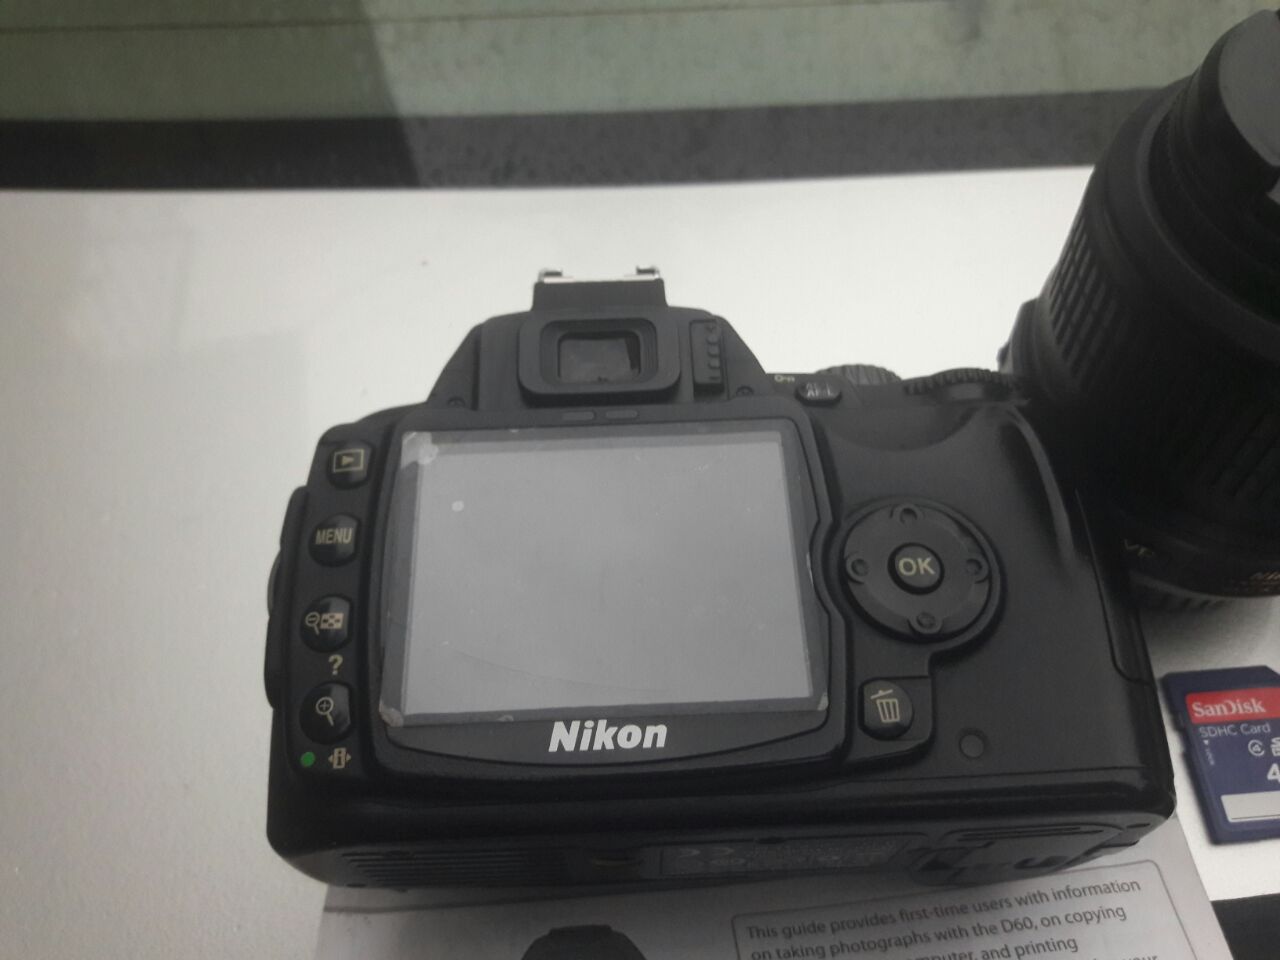 Nikon D60 Camera & Accessories For Sale - 70k - Graphics/Video Market